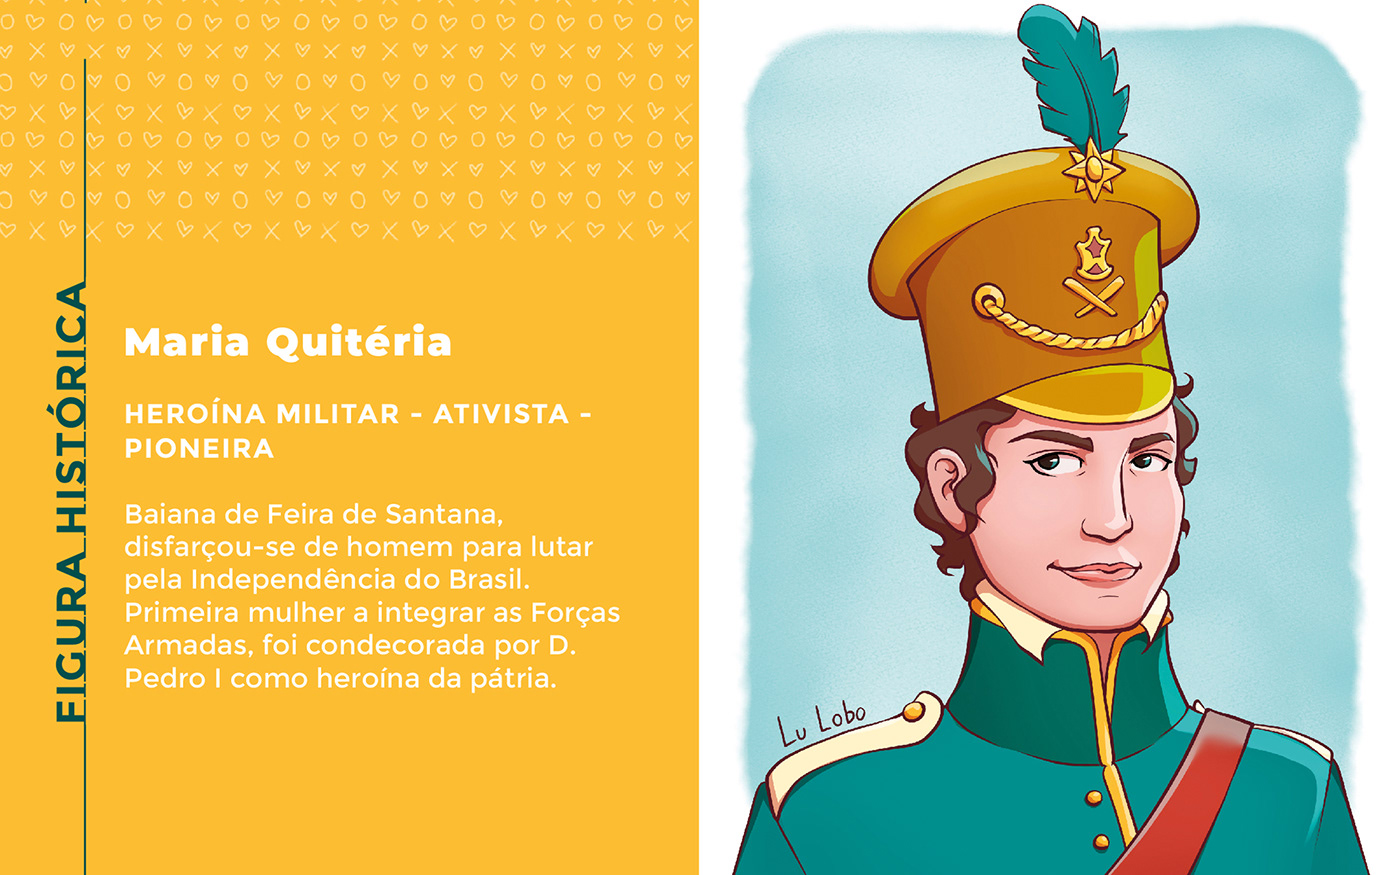 An illustrated portrait of Maria Quitéria, a brazilian militar heroe.